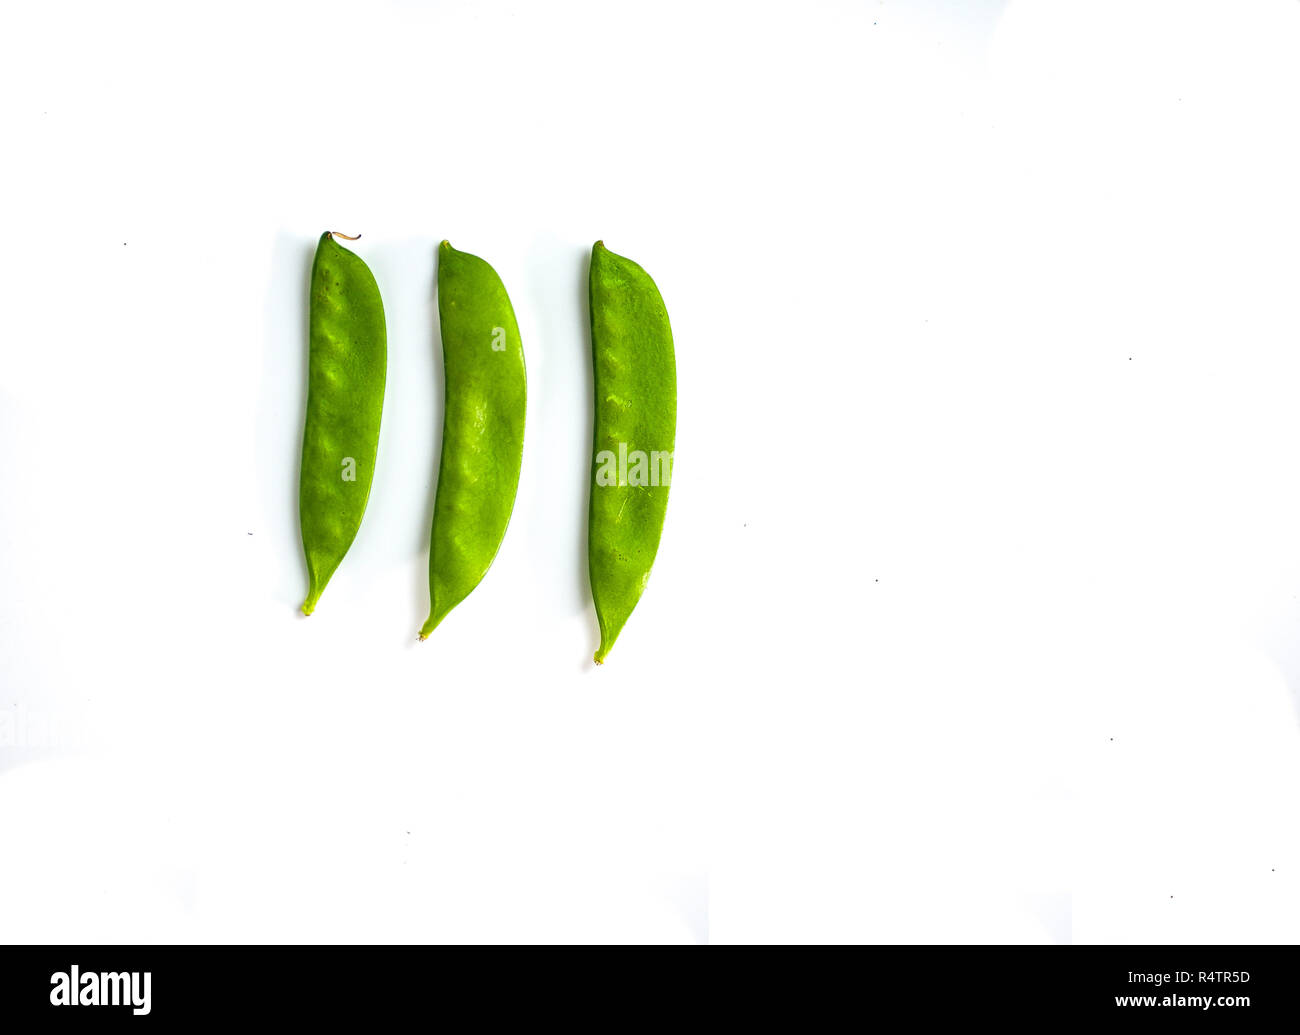 Three snap pea pods on a minimalist white background Stock Photo